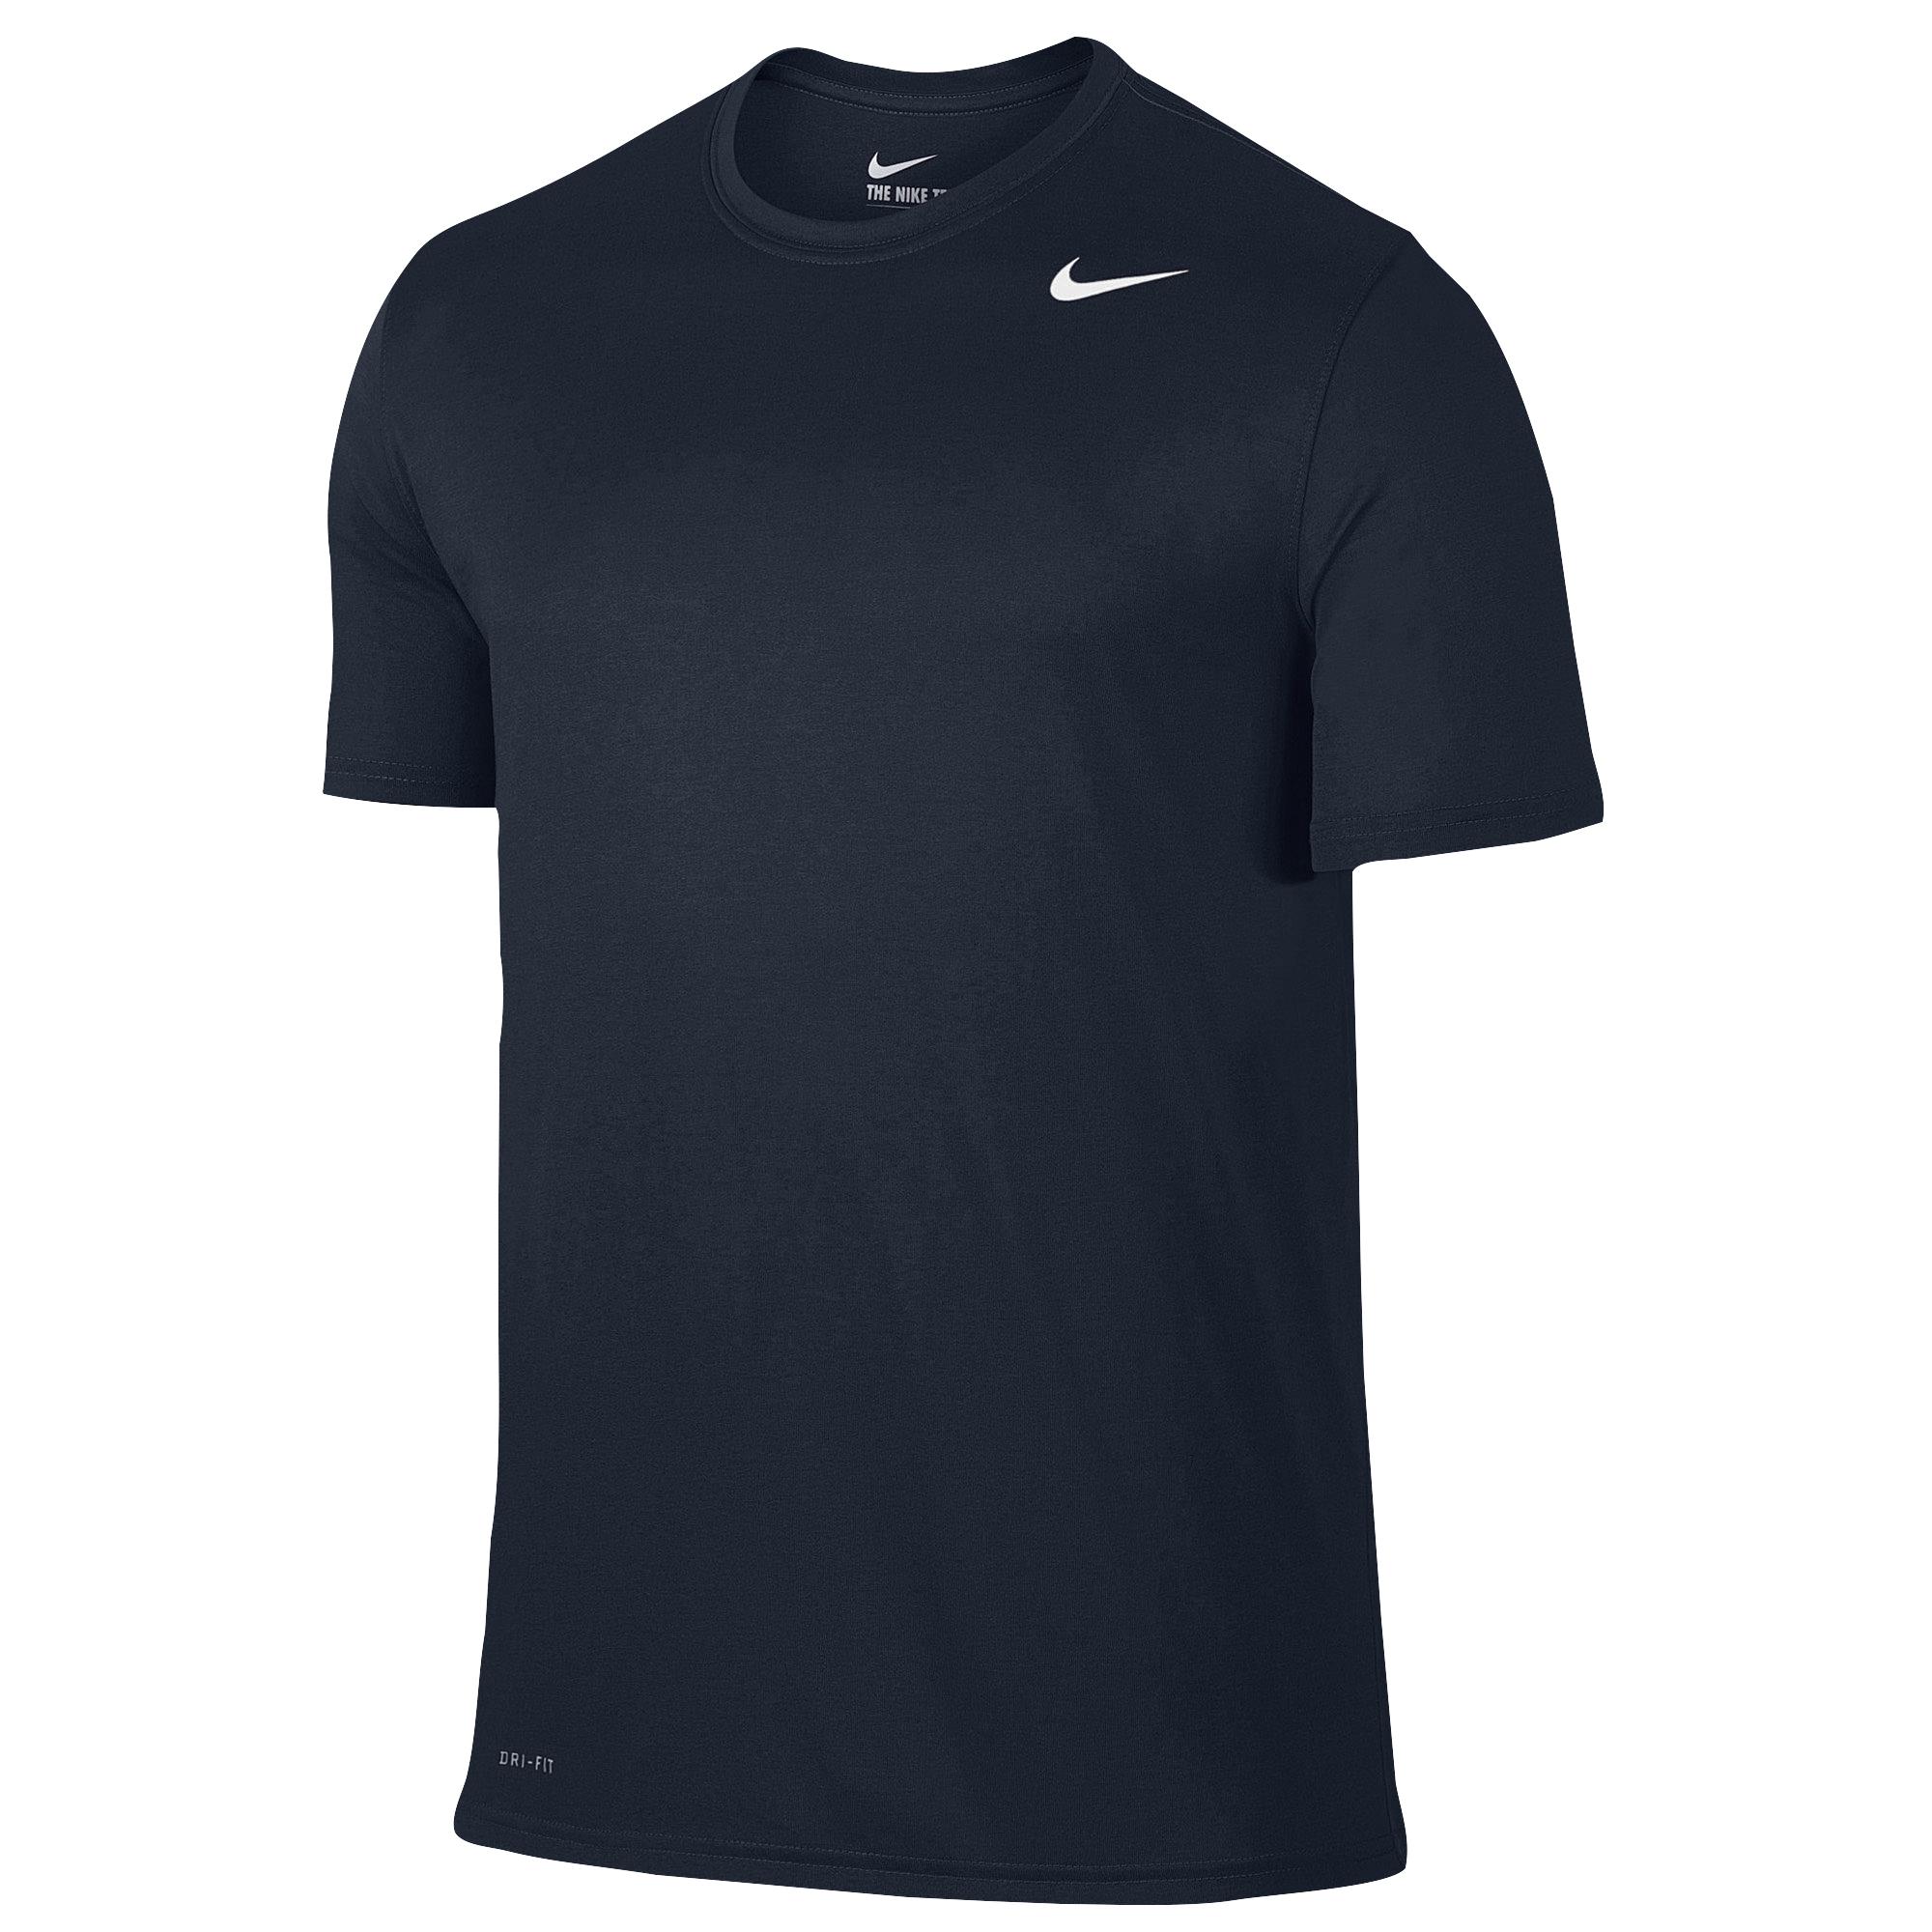 Nike Legend 2.0 Short Sleeve T-shirt in Blue for Men - Lyst